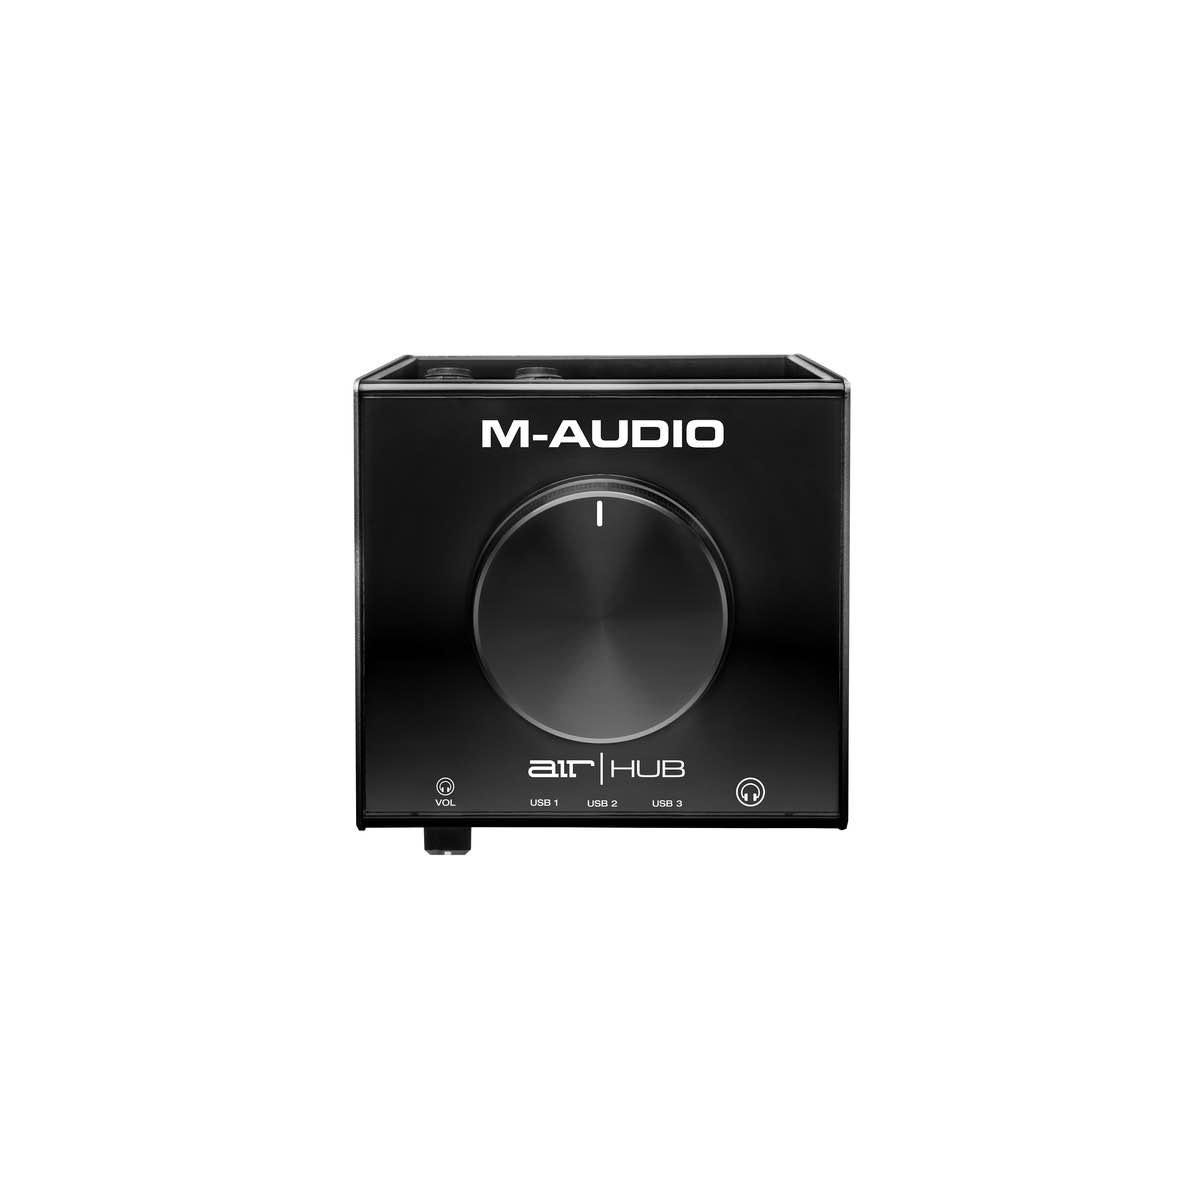 M-audio air|hub